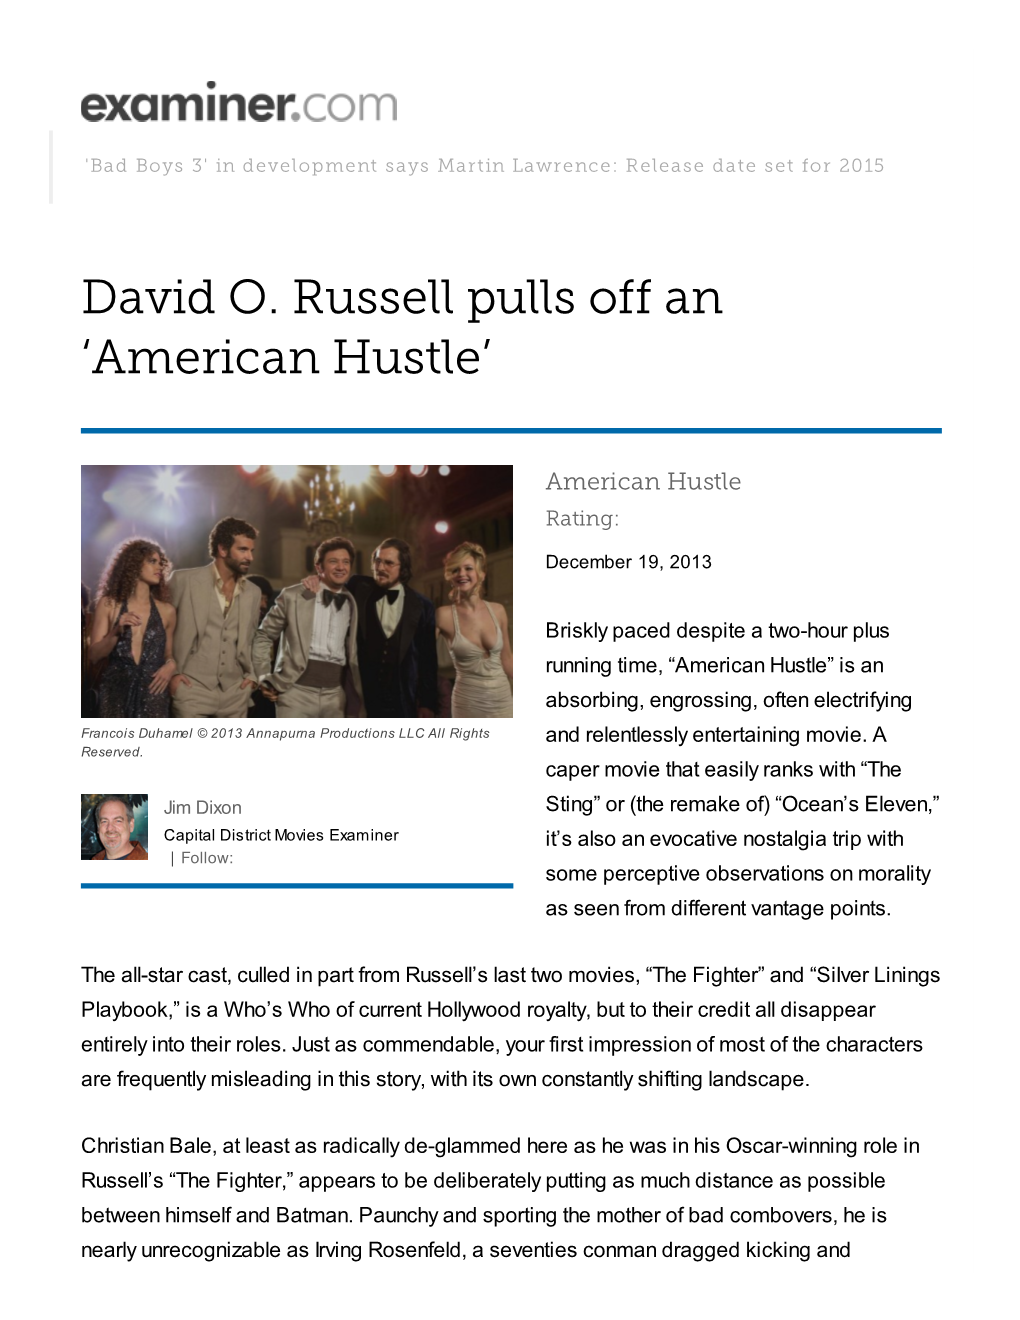 David O. Russell Pulls Off an 'American Hustle'